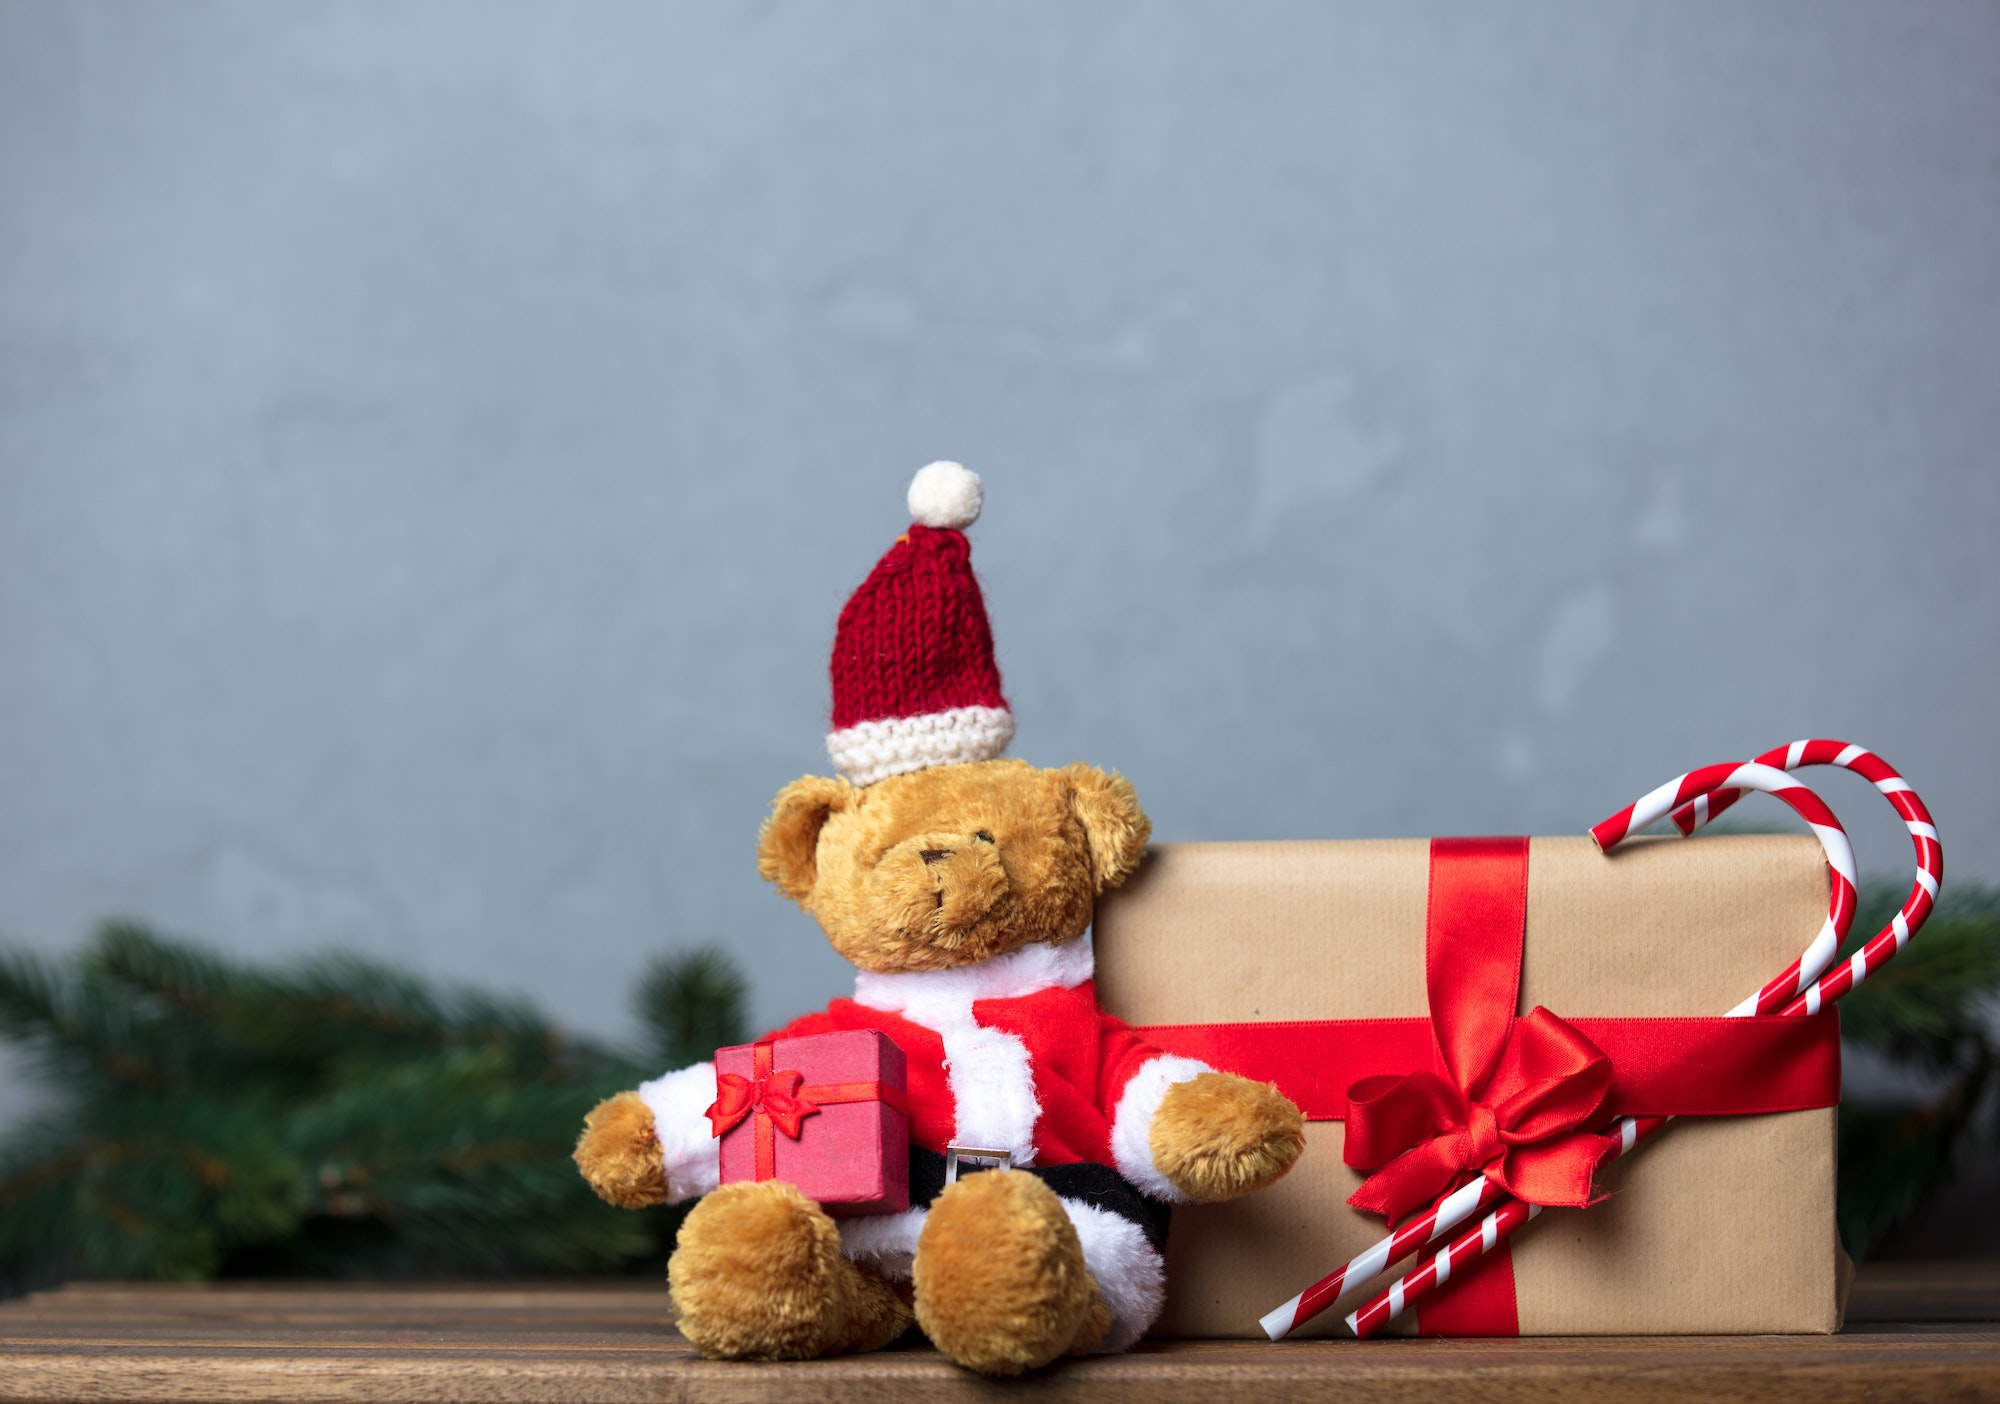 Christmas gifts and Teddy bear